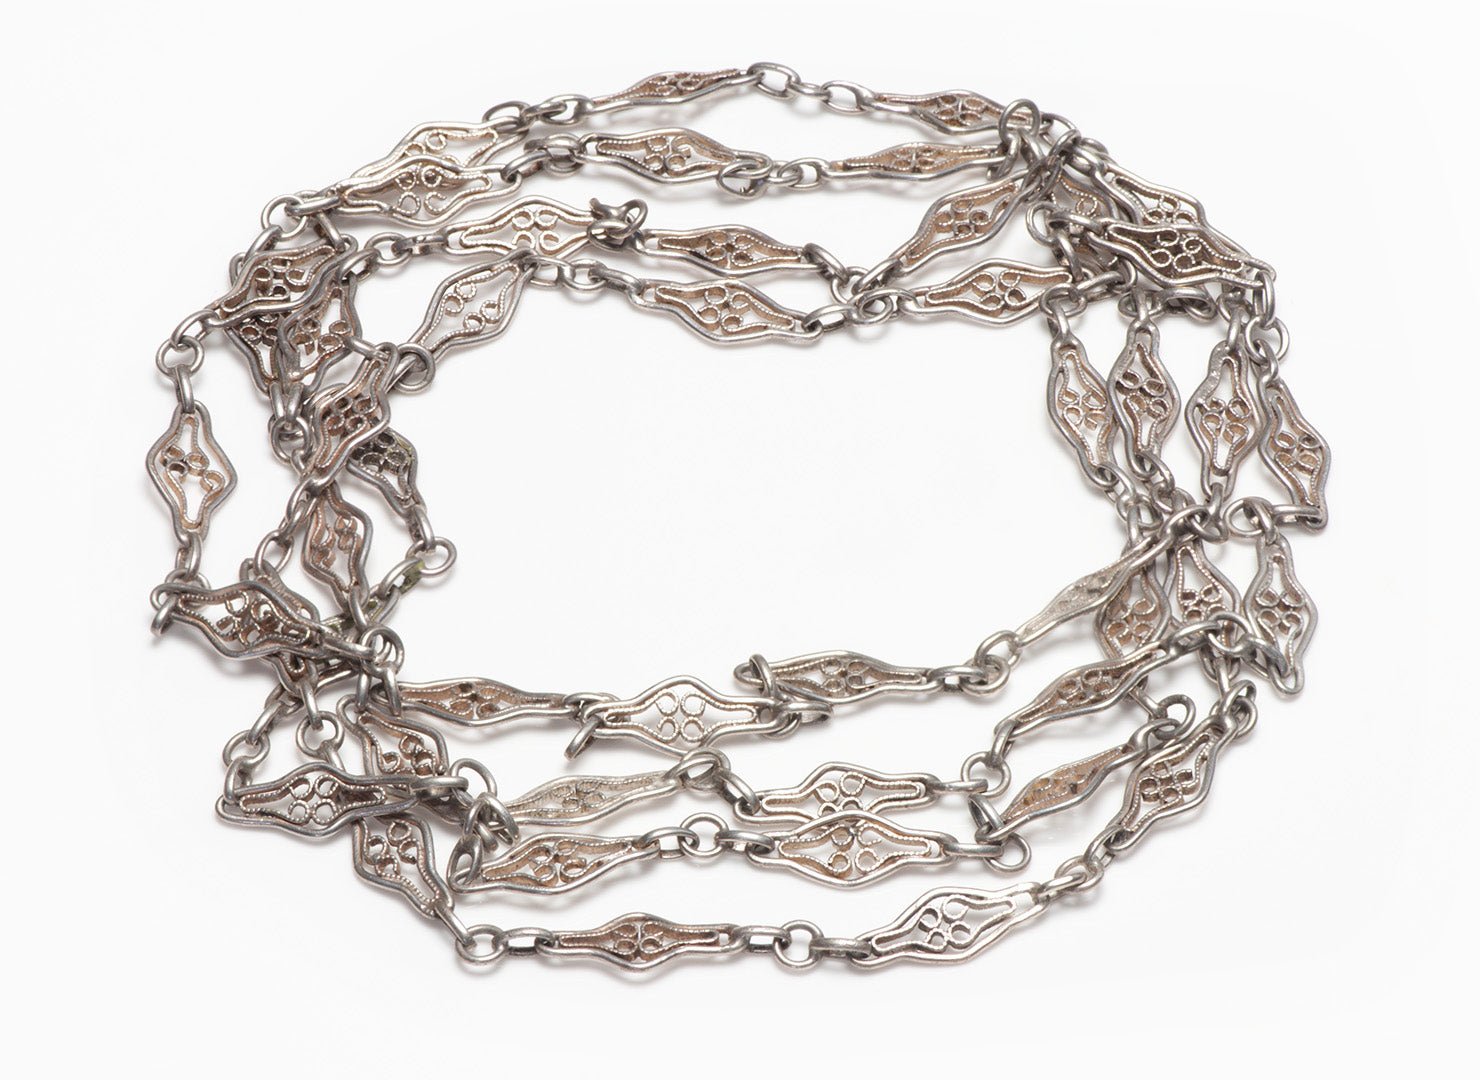 Antique Silver Filigree Chain Necklace